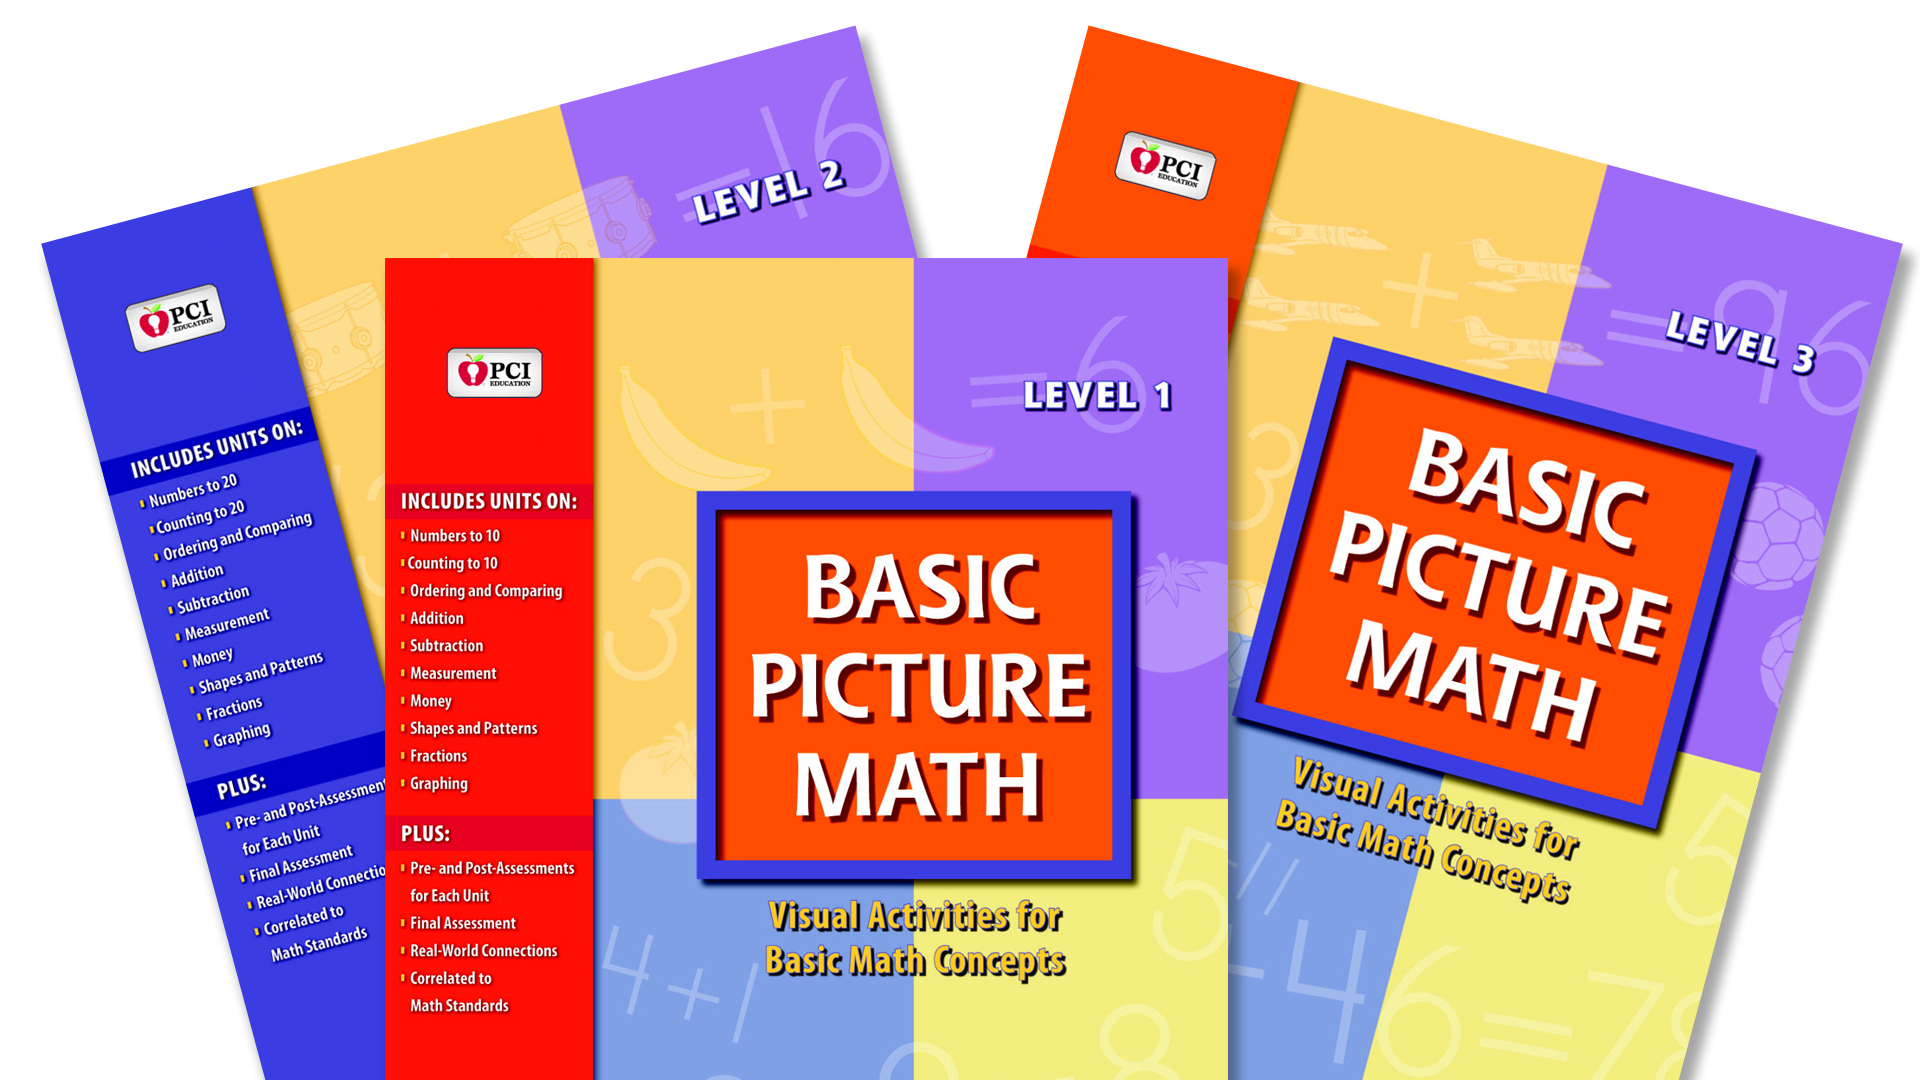 Basic Math Concepts. Basics picture. Book Level 3 Inter pdf. Multi Level book. Книги уровня b2